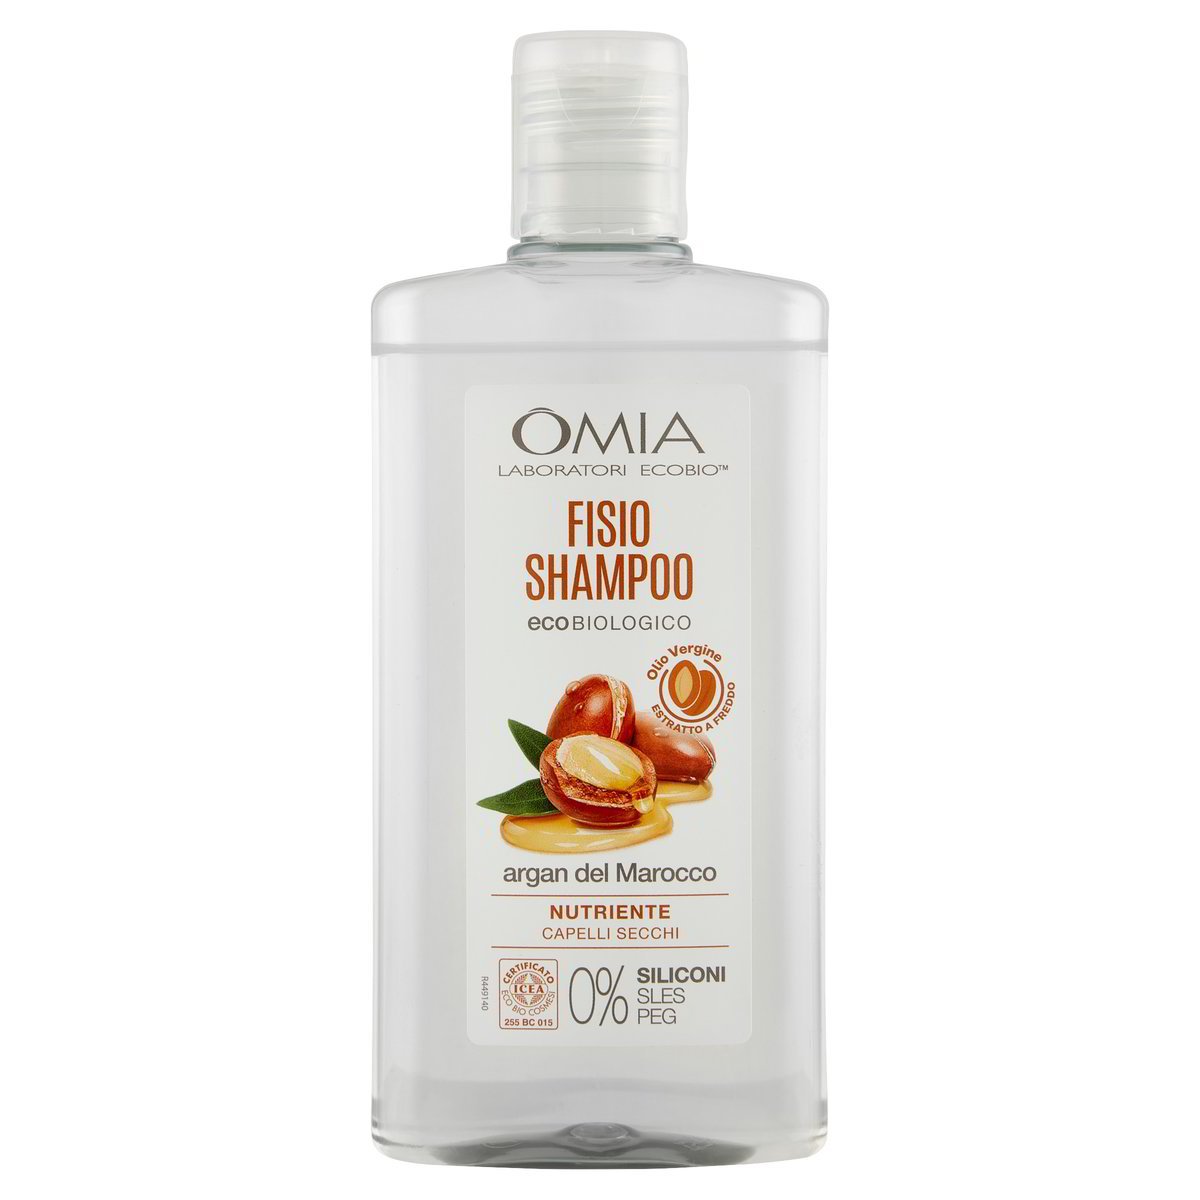 Omia Fisio shampoo ecobio